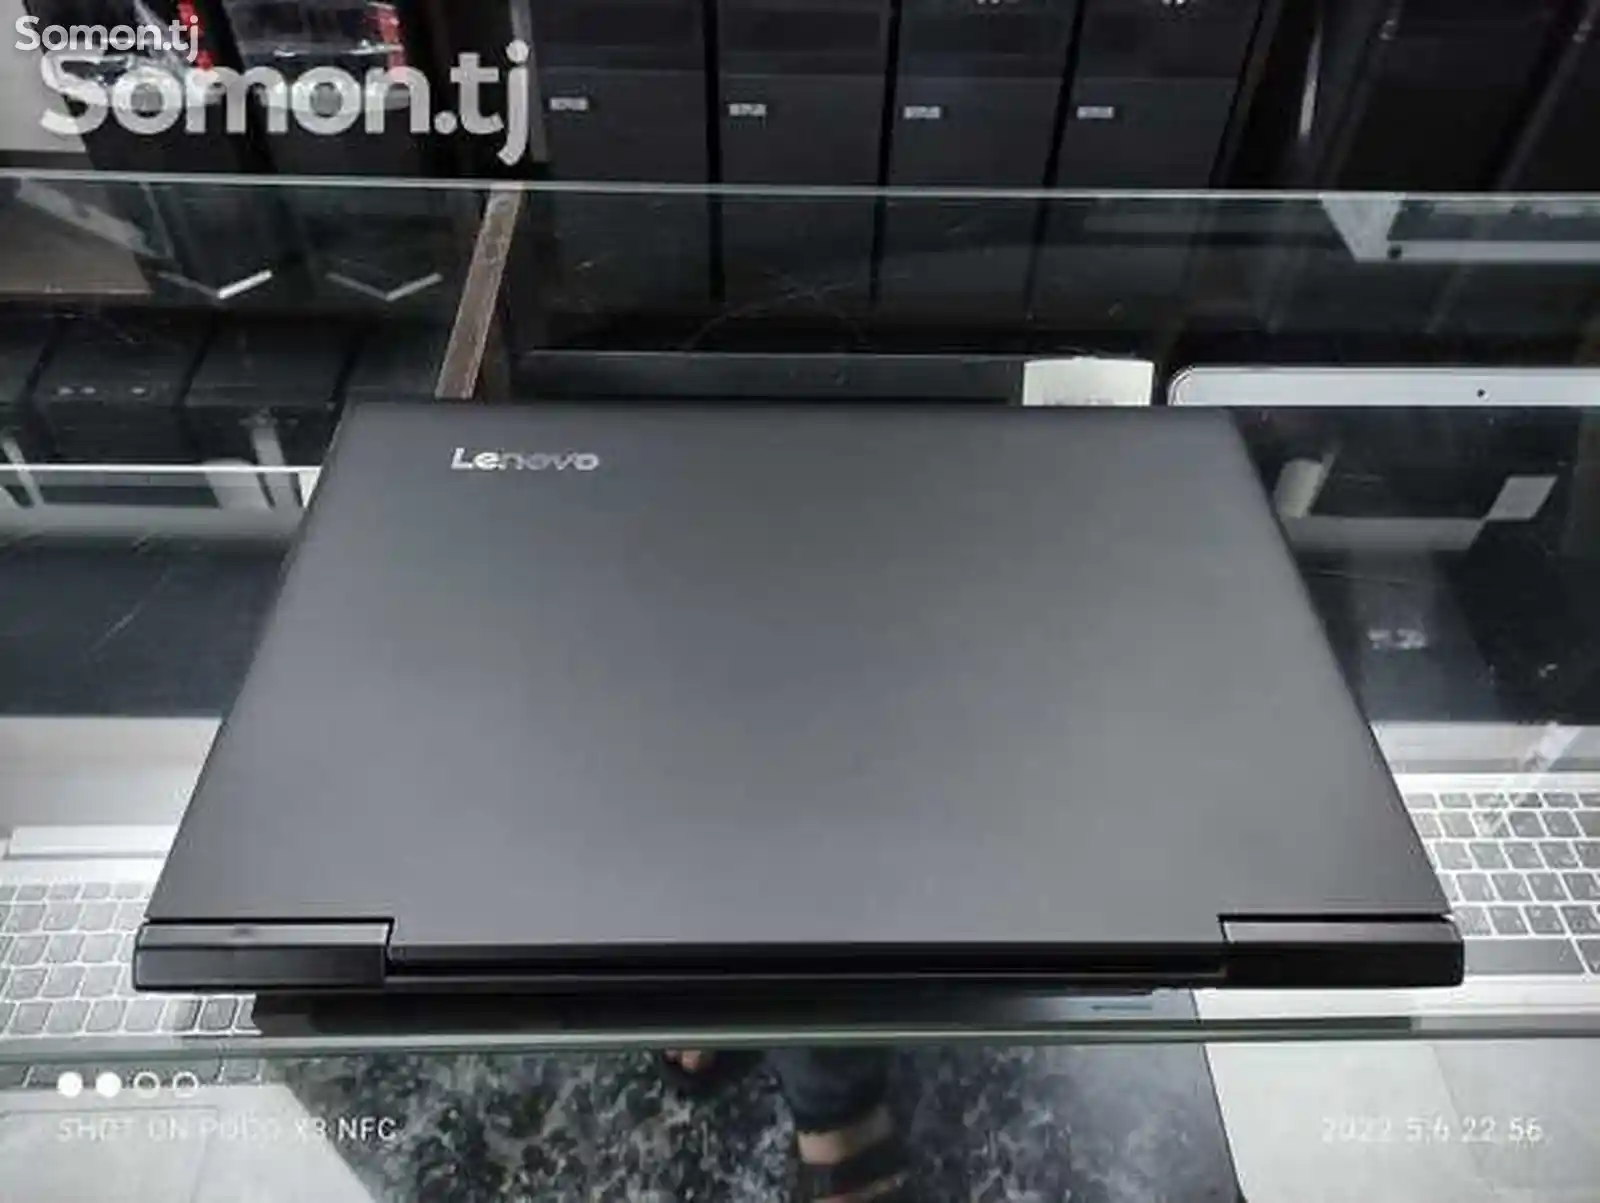 Игровой Ноутбук Lenovo 700 Gaming Core i5-6300HQ GTX 950M 4GB 6TH GEN-5